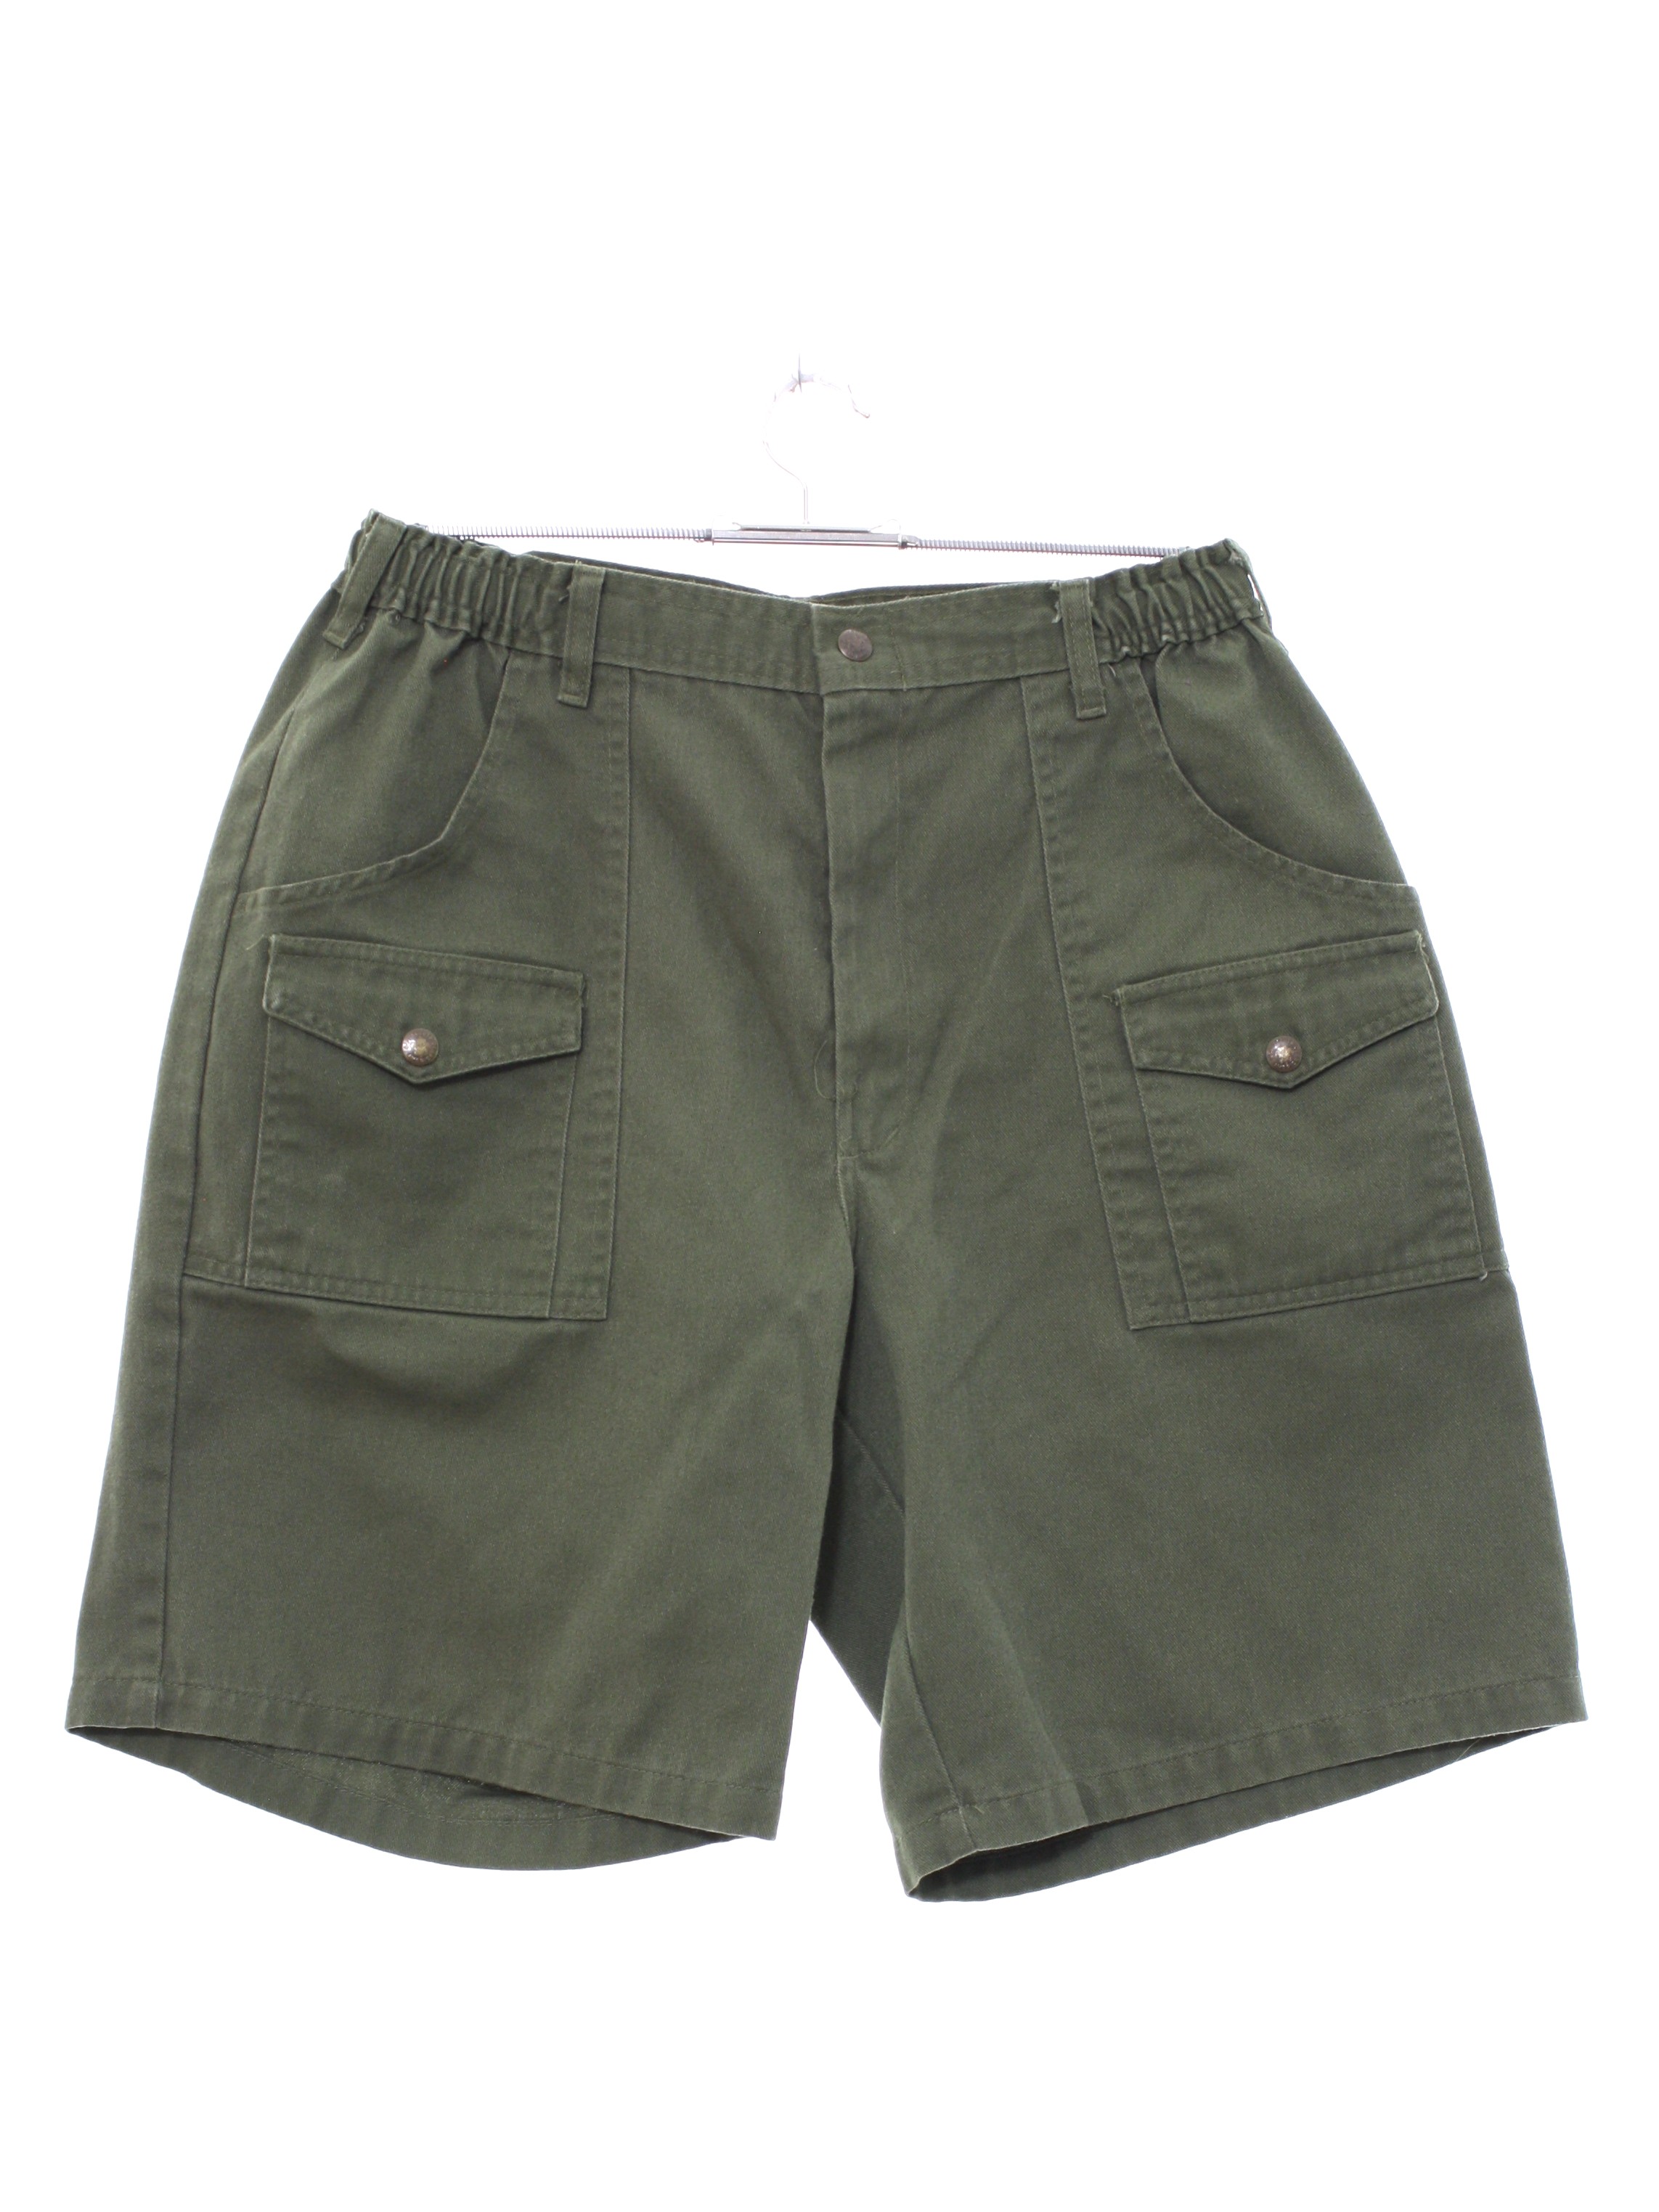 Retro Eighties Shorts: 80s -Boy Scouts of America- Mens khaki green ...